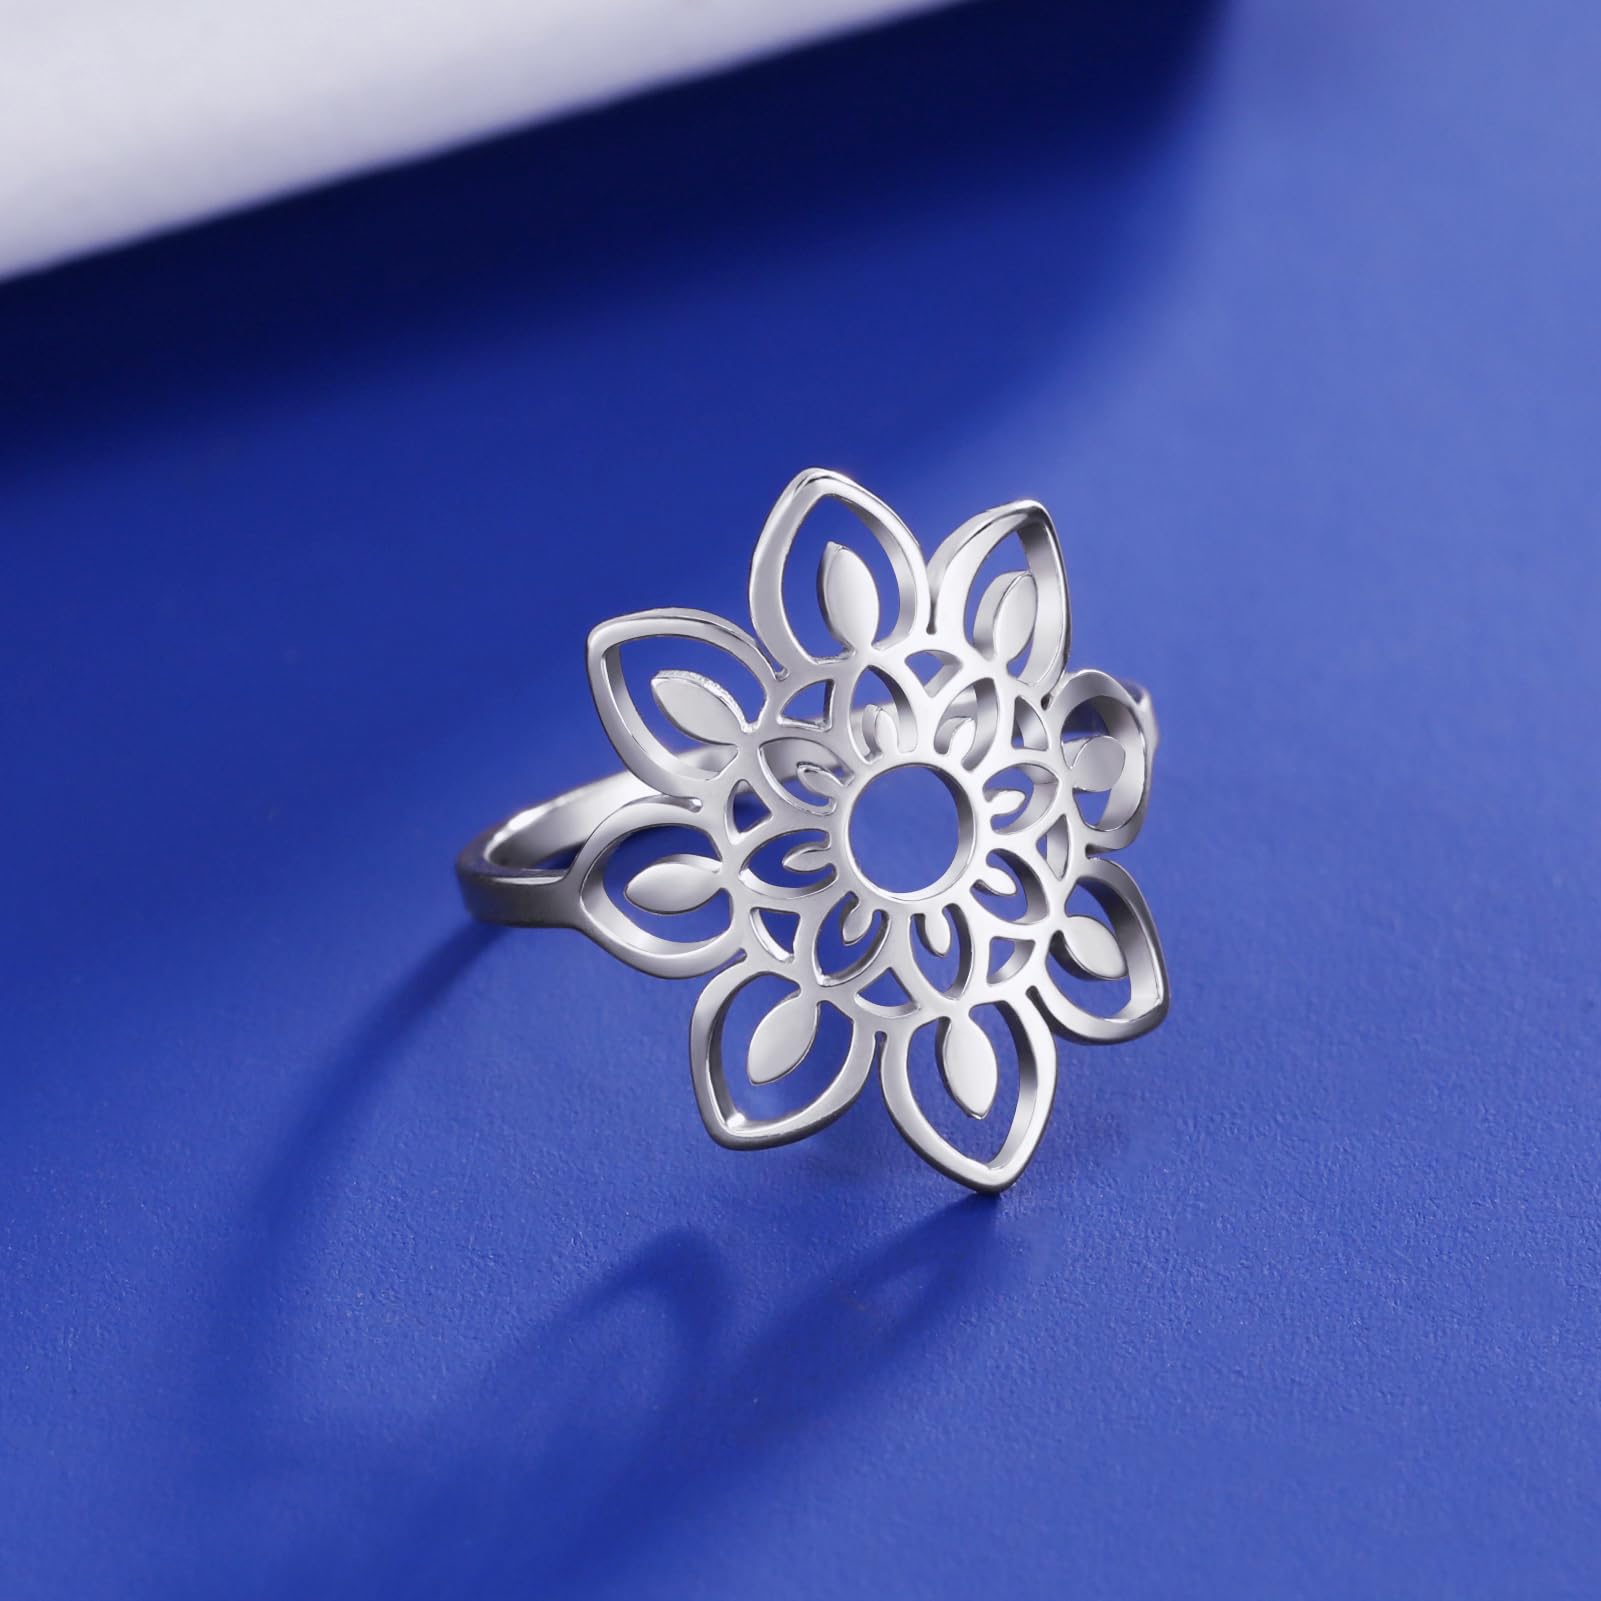 TEAMER Lotus Ring Stainless Steel Hollow Lotus Ring Geometric Ring Simple Jewelry for Women Girls